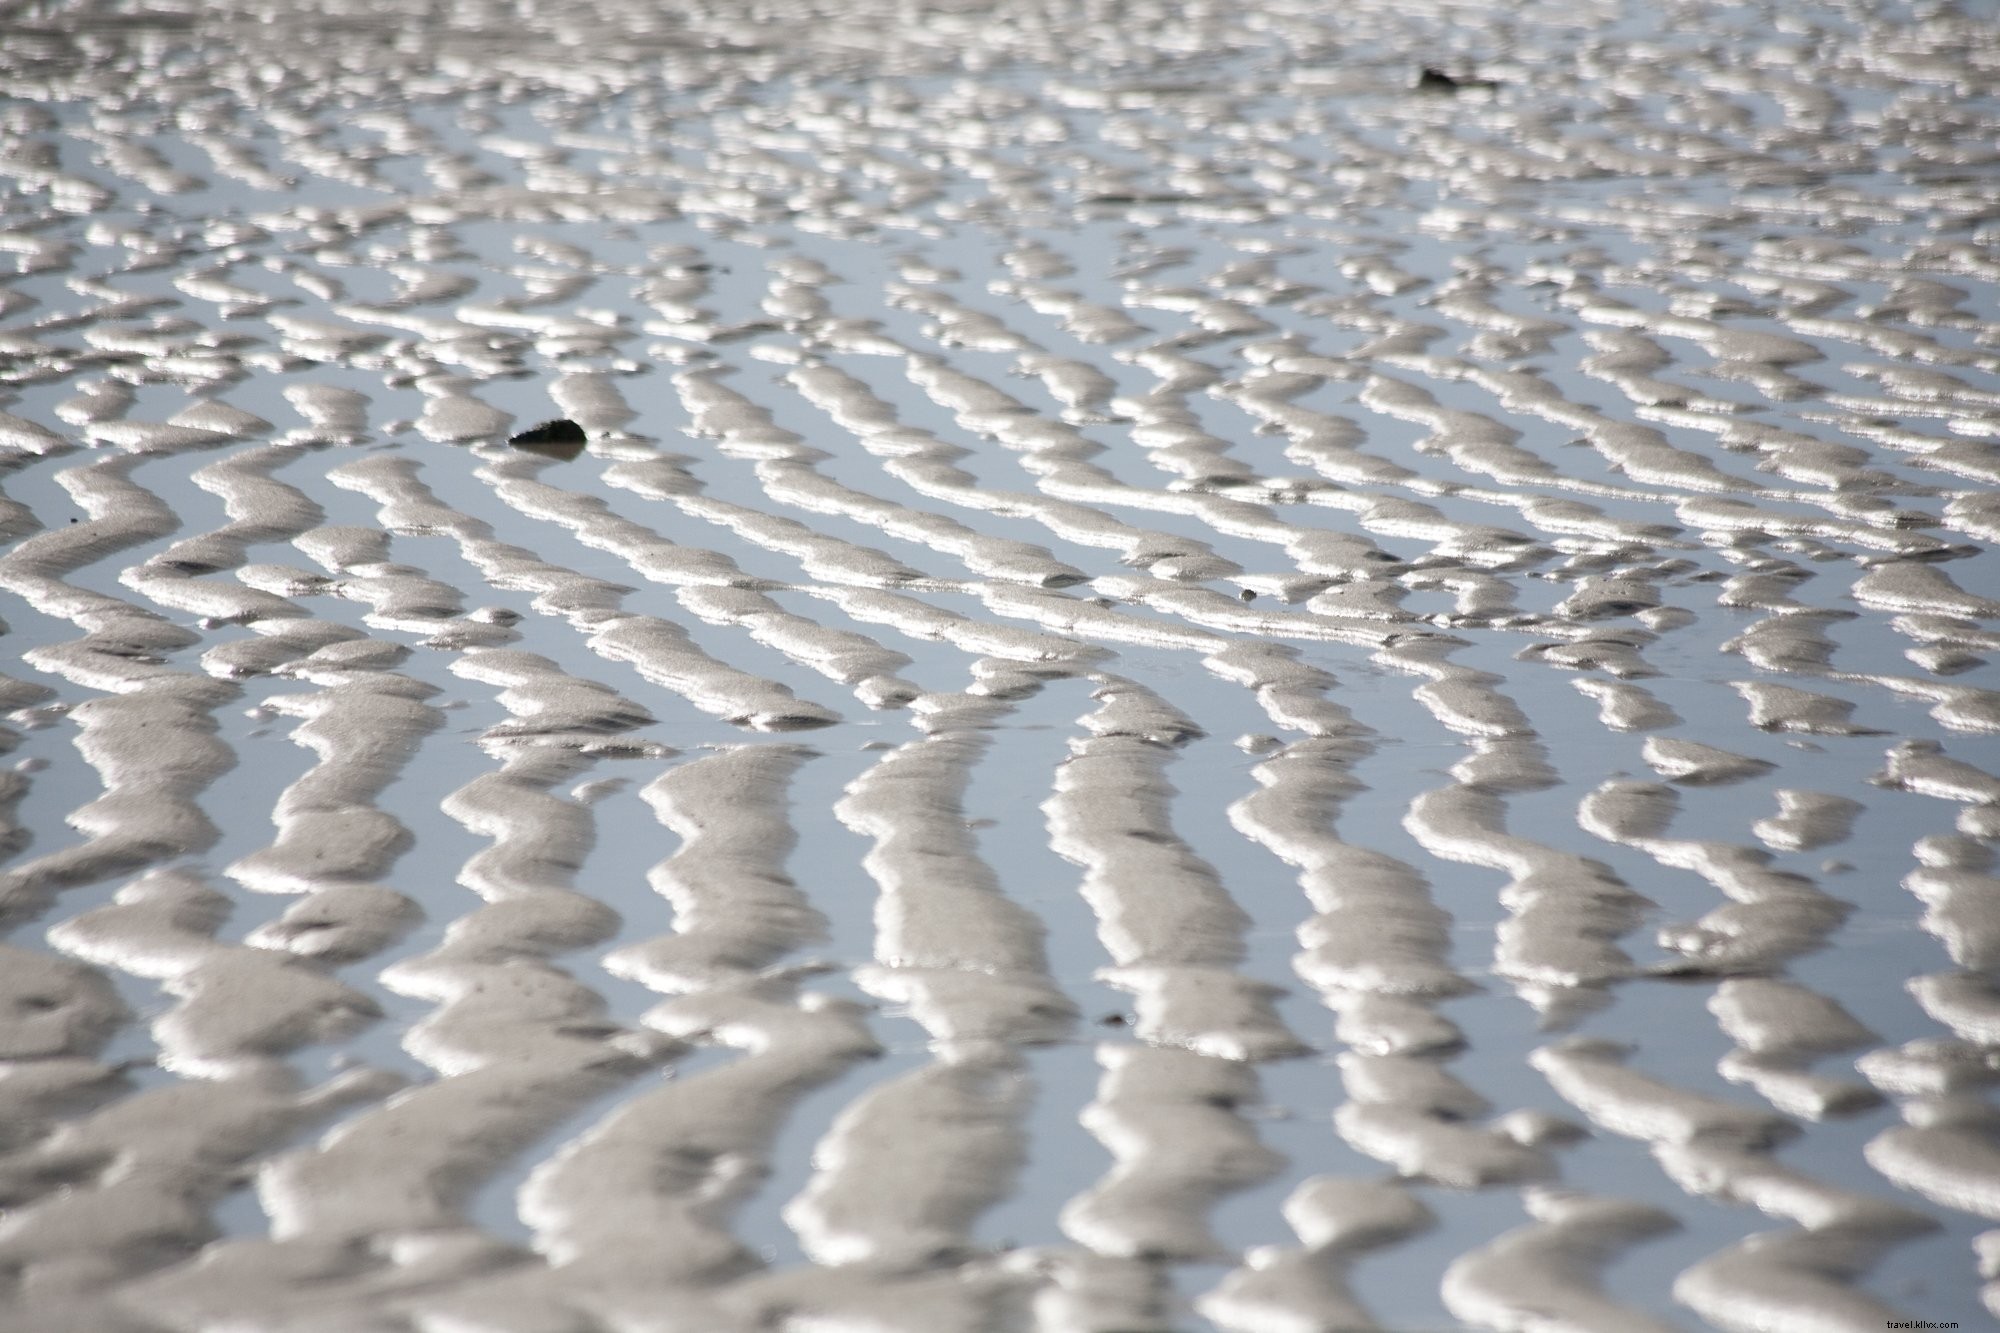 Foto de arena ondulada de la playa del océano